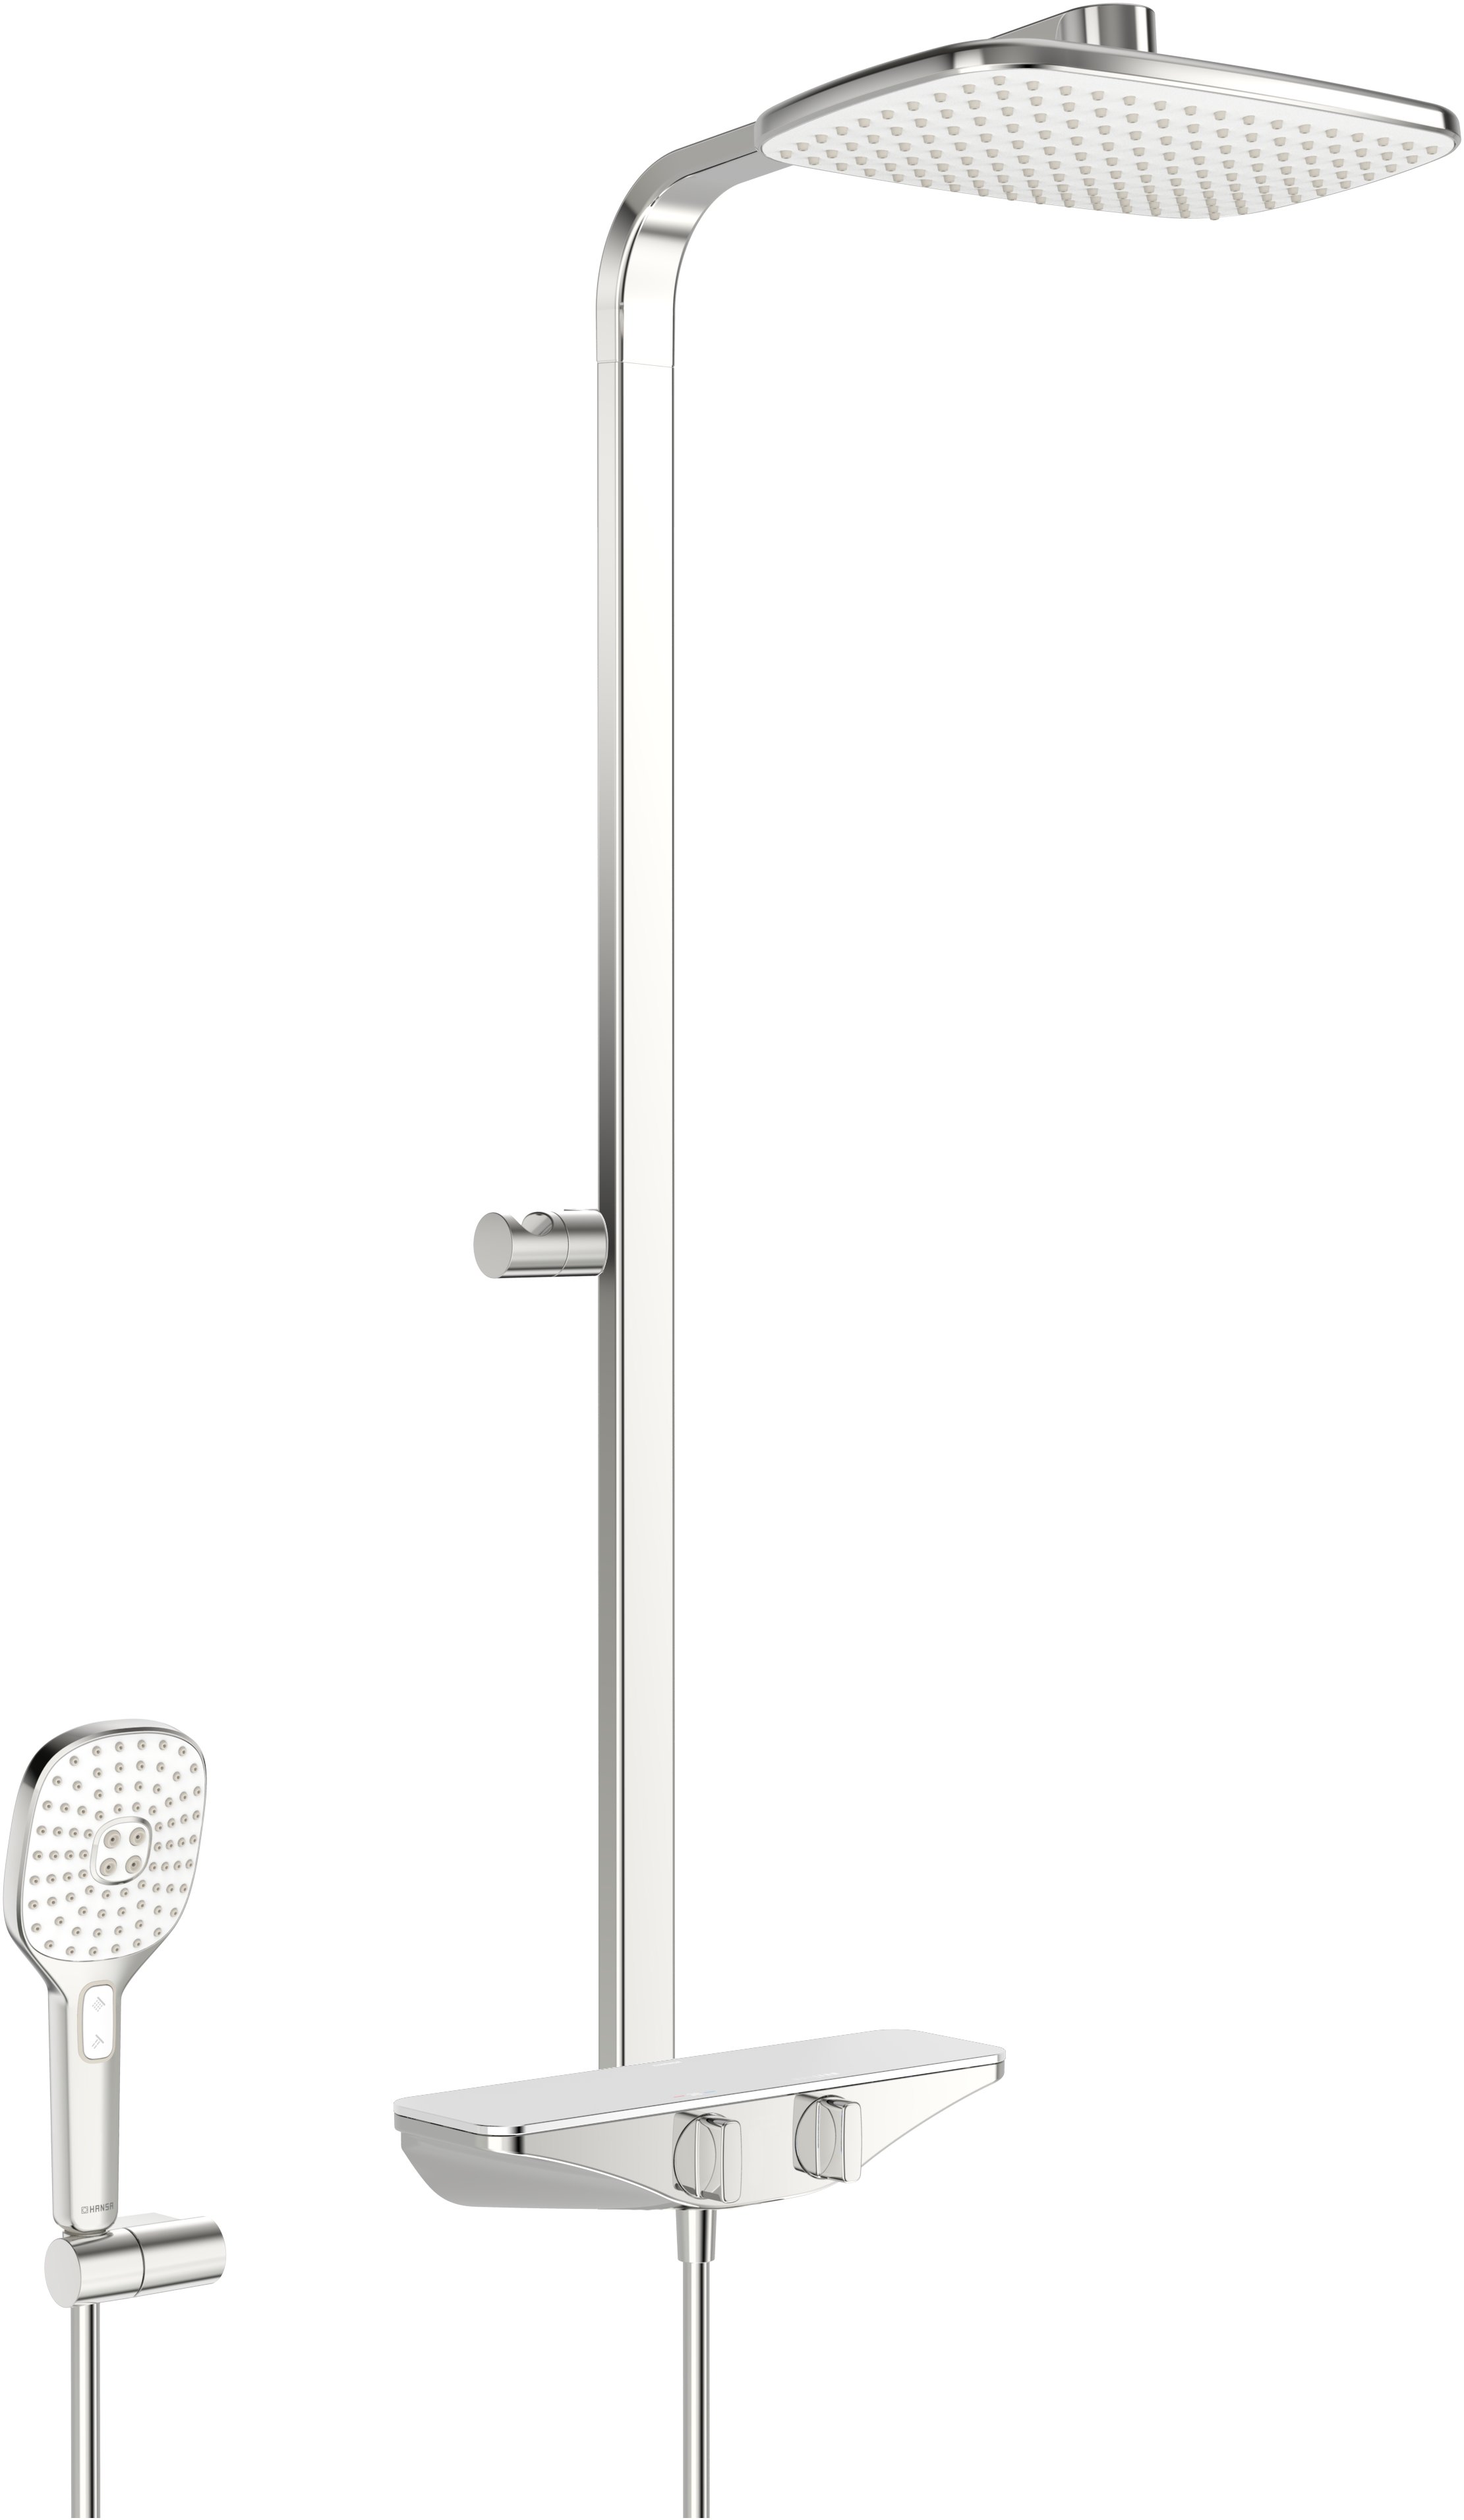 Hansa Hansaemotion sprchový systém - nástěnná termostatická sprchová baterie, polička bílá 5865017182